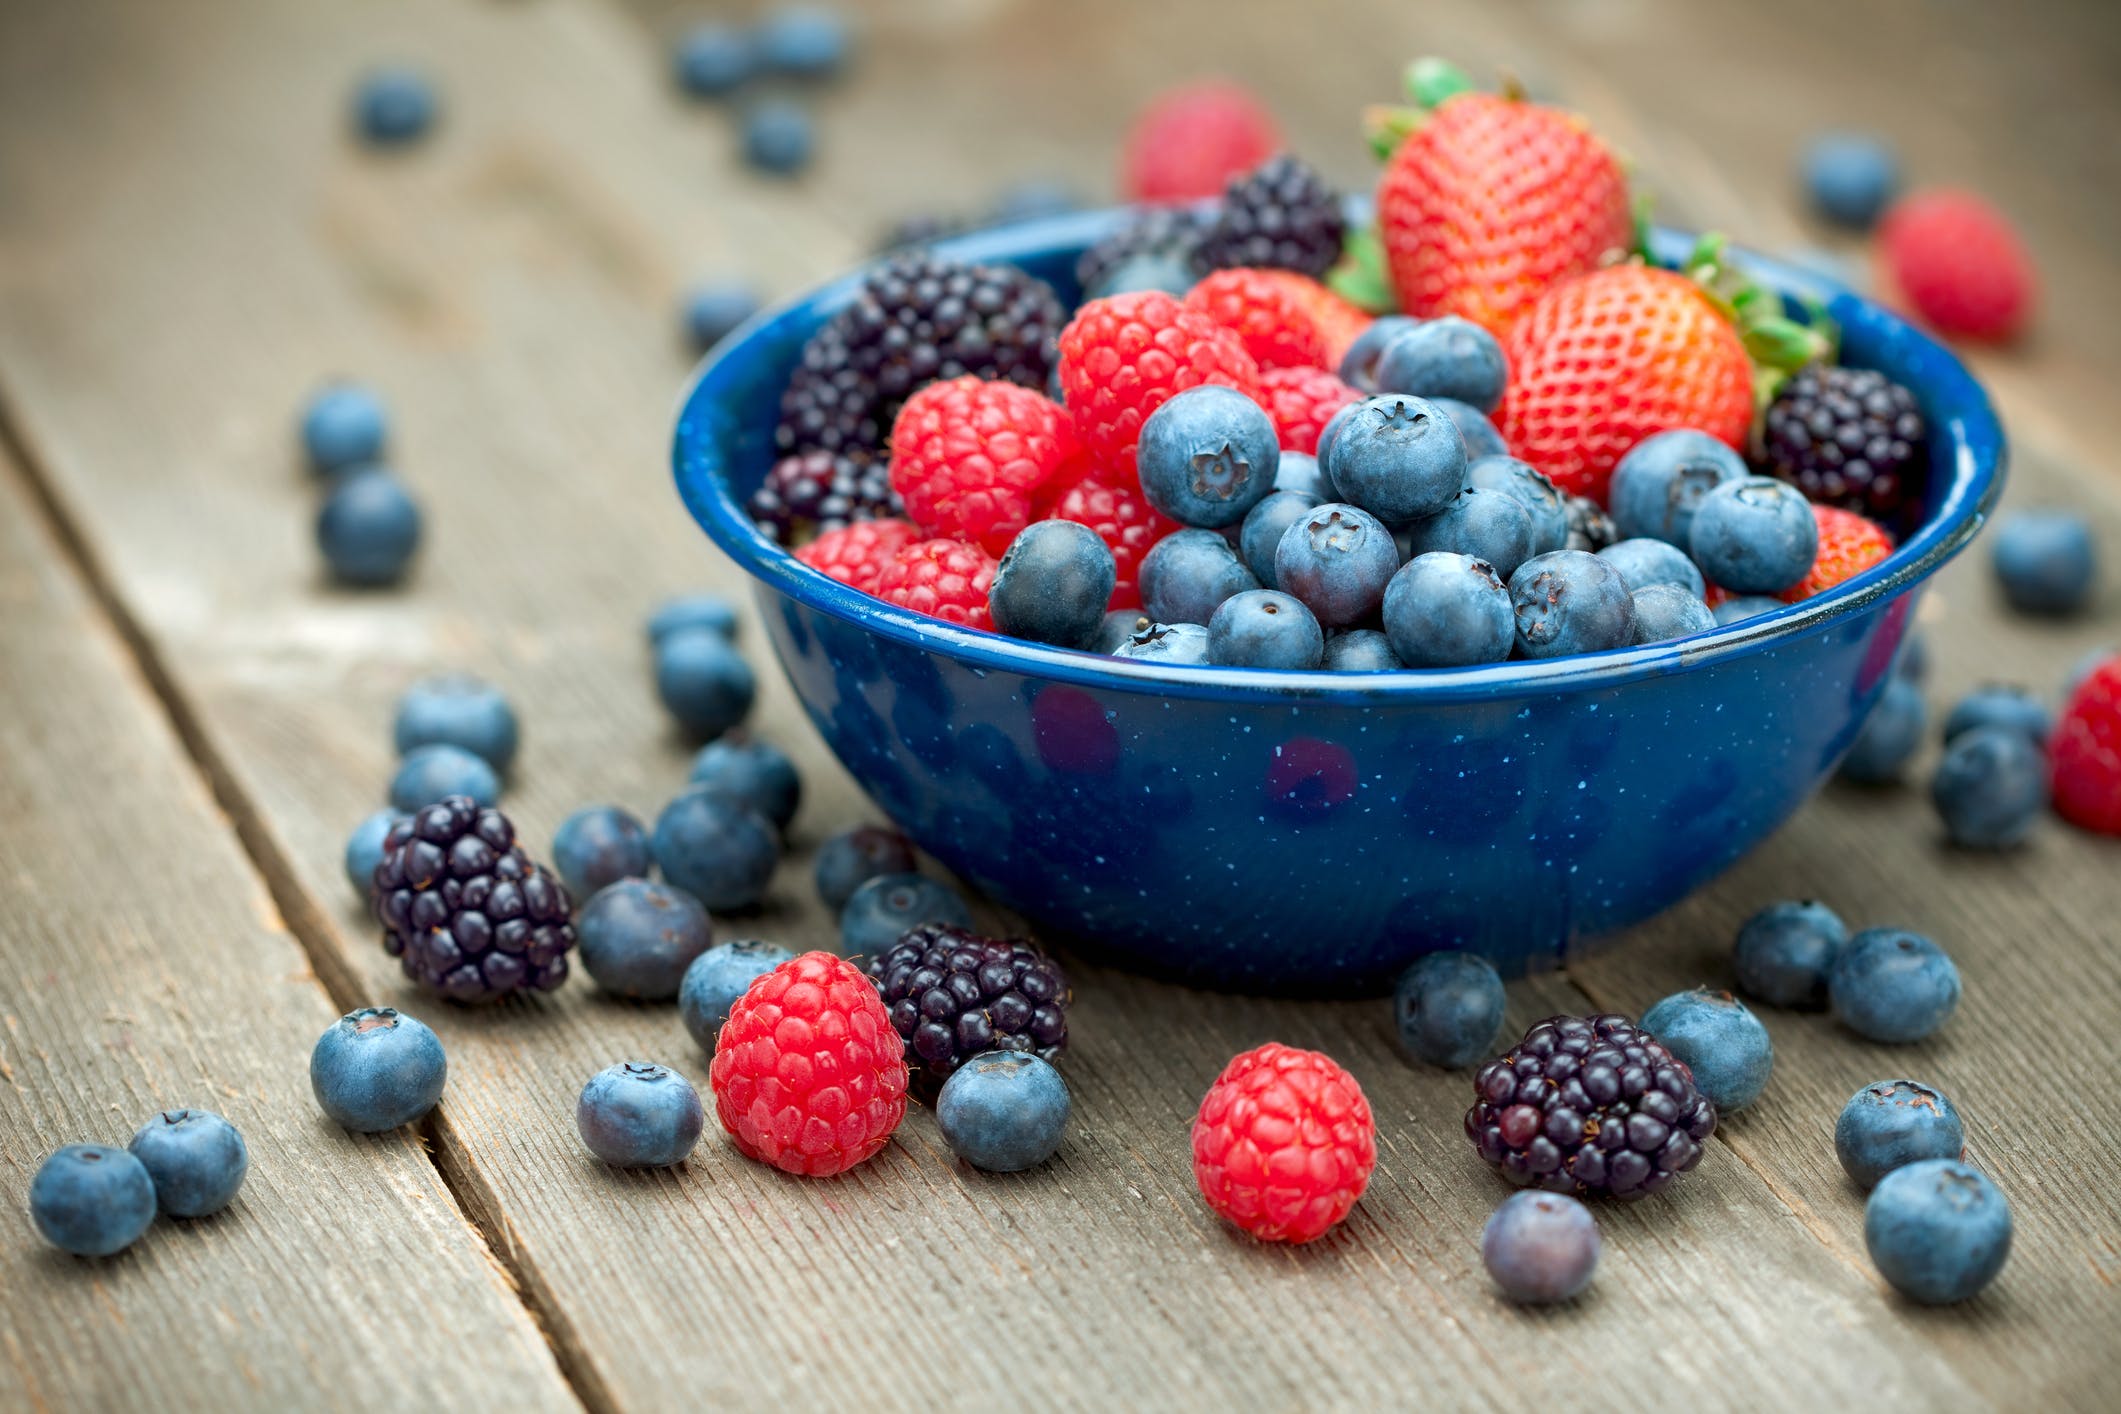 6 Tips for Savoring Fruit in a Low Sugar Way